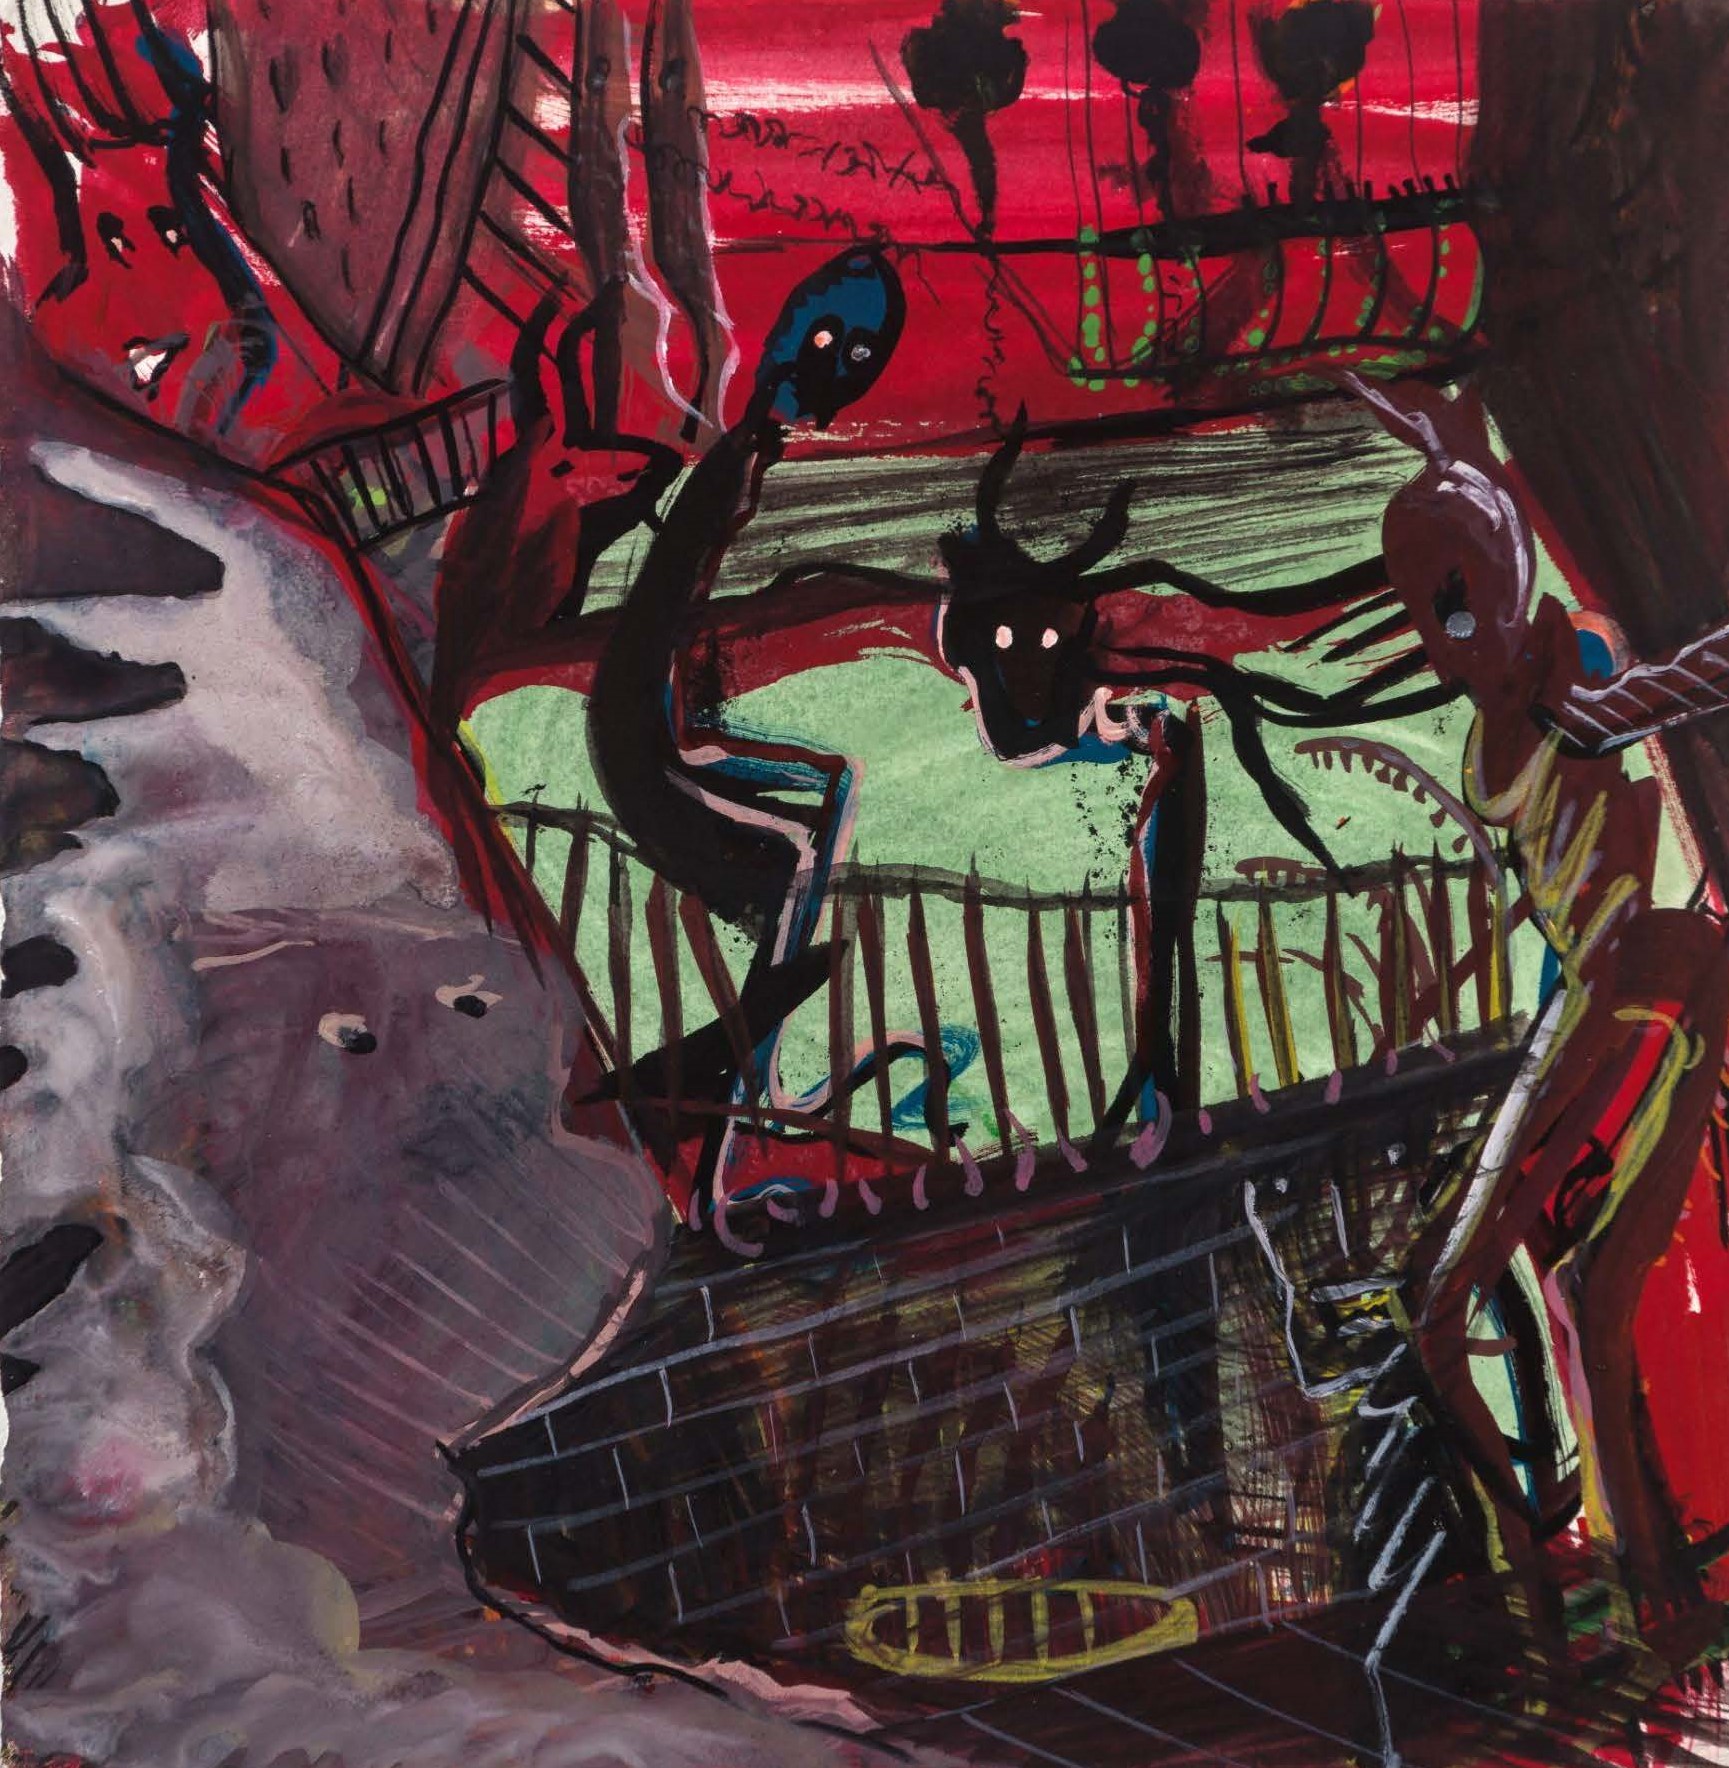 Shira Ben Eliyahu
"The Raging Bull"
2021
Gouache on Paper
19x19 cm